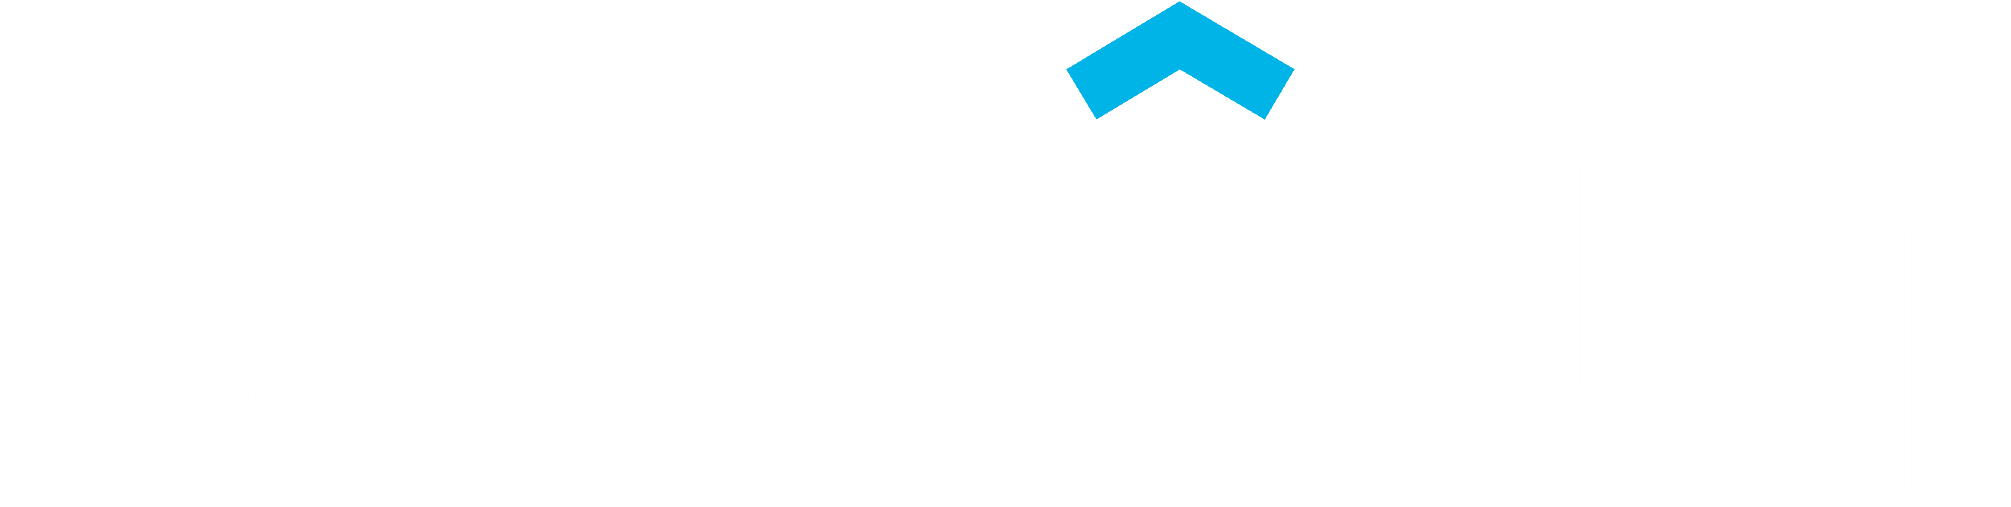 Spoint Logo